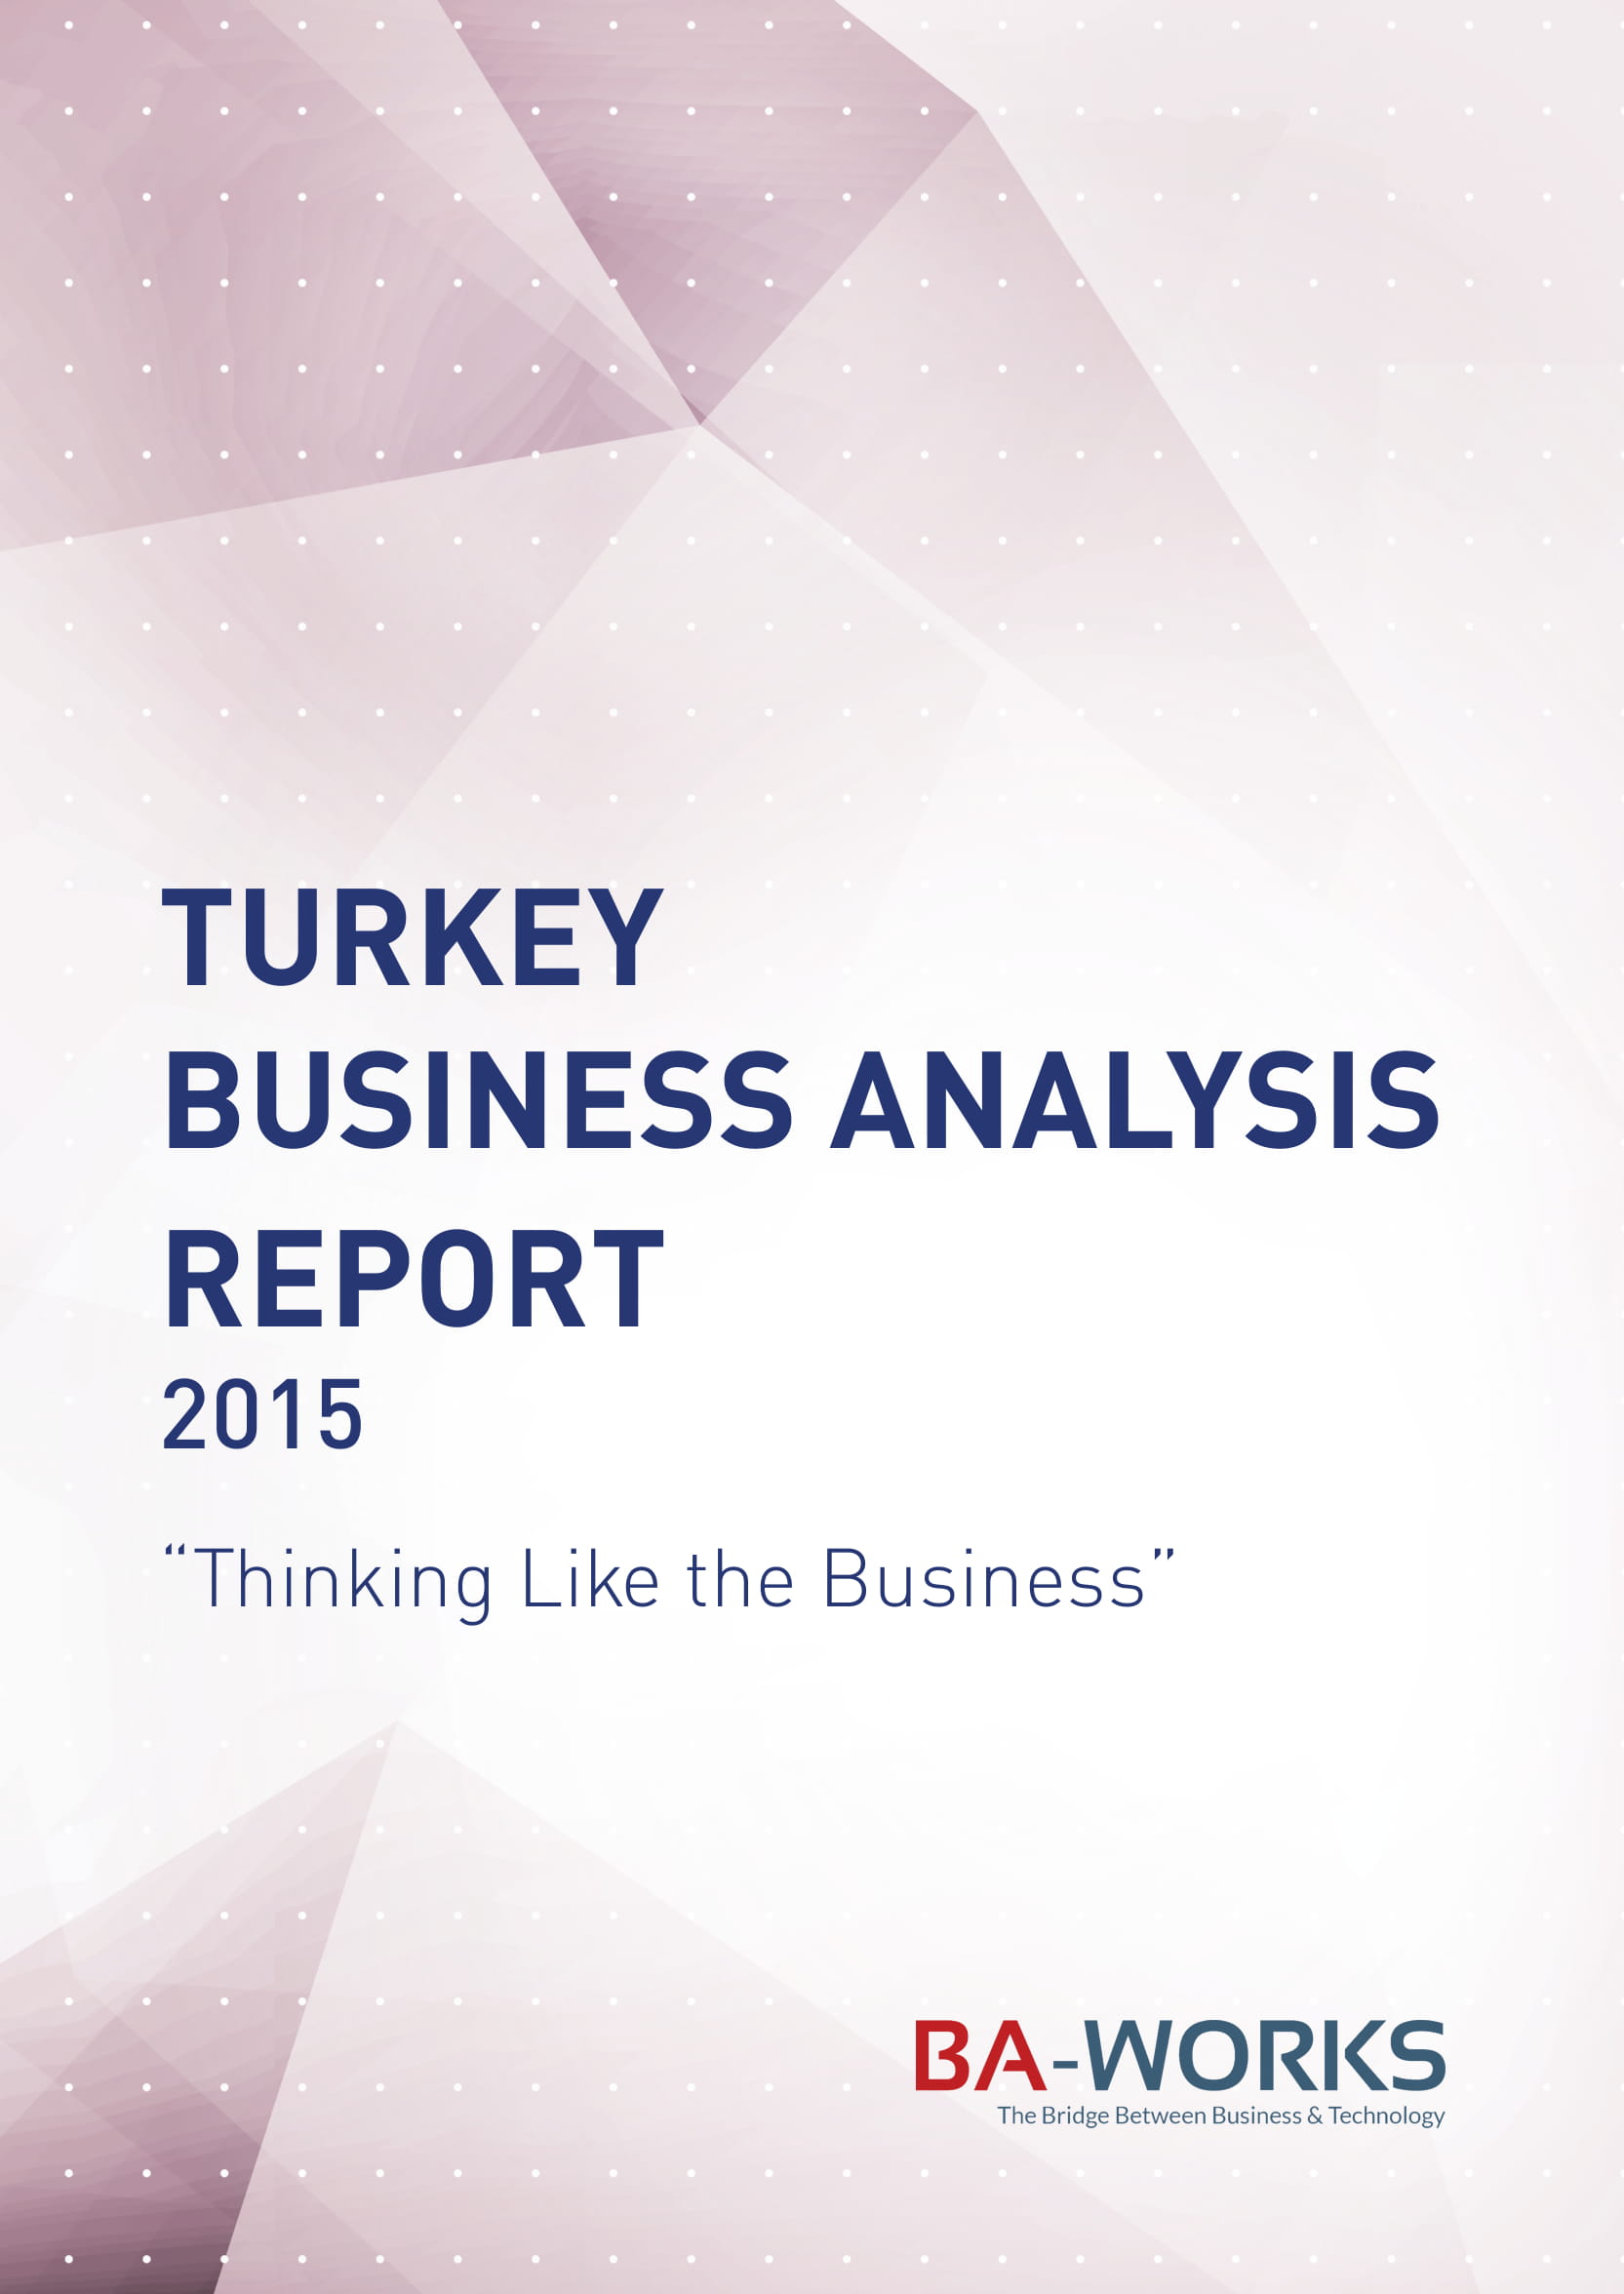 turkey business analysis report example